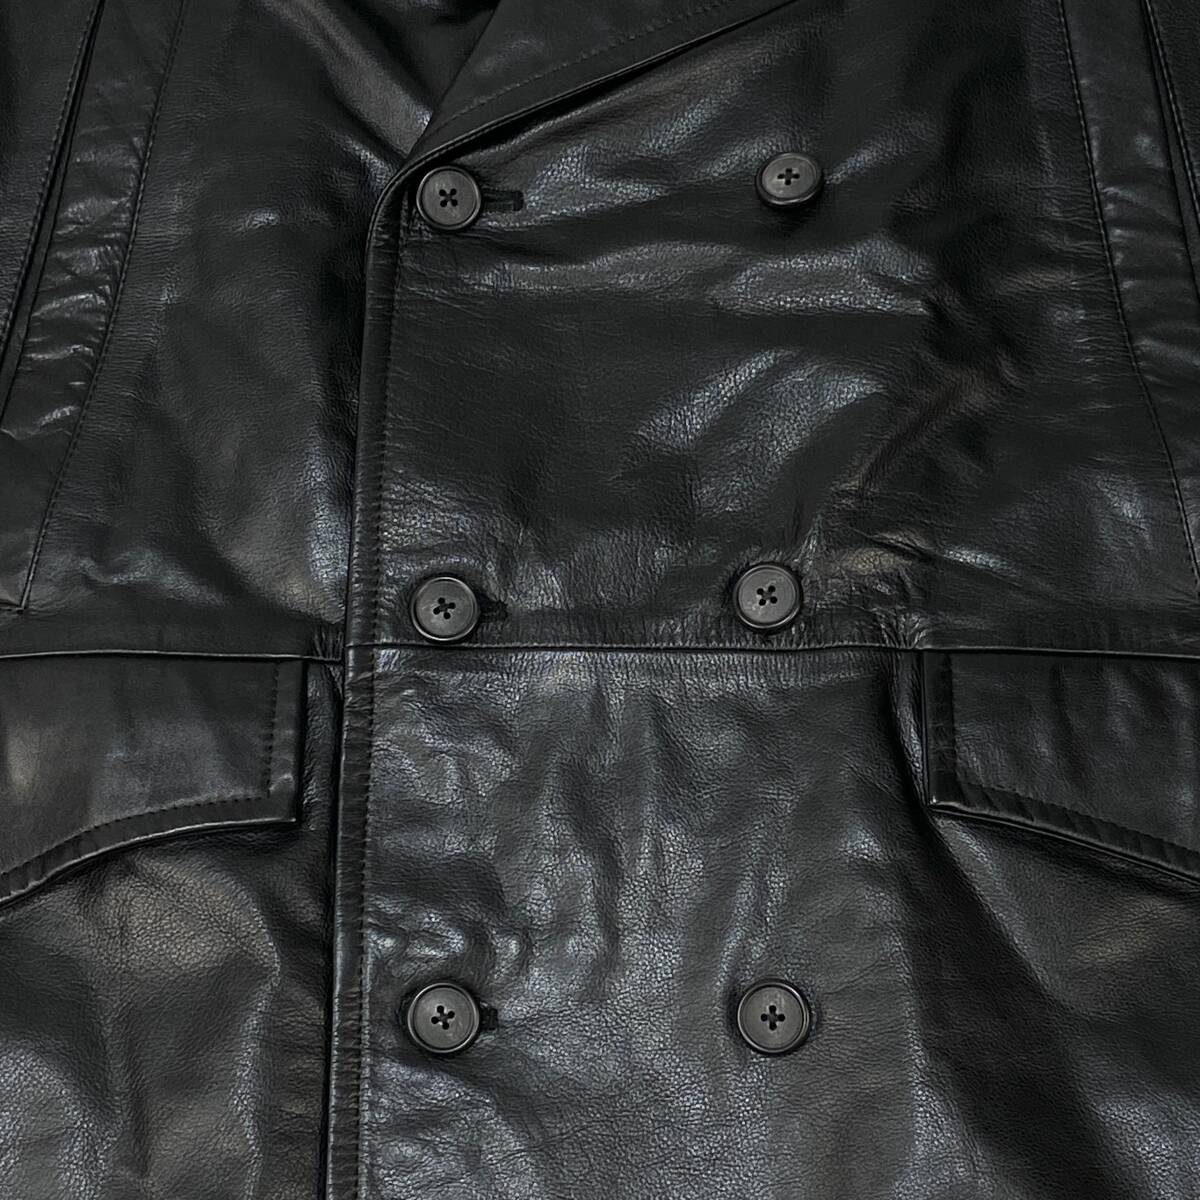  ultimate beautiful goods CCU /si-si- You 23AW CHARLIE STORM P COAT /kau leather pea coat SH-41-COW 2 SSM3497 leather jacket half coat 